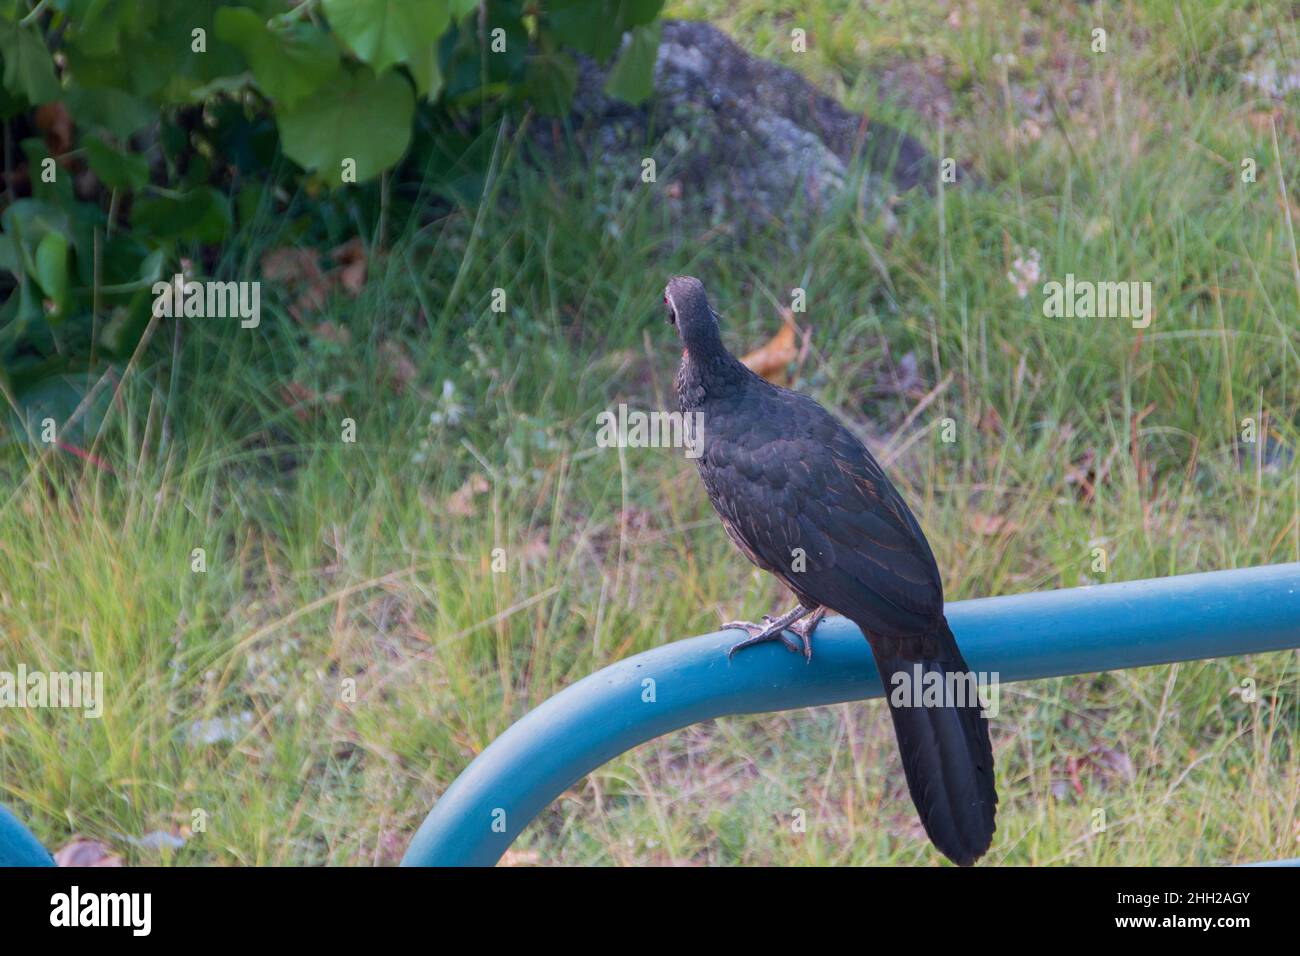 bird known as jacu, outdoors in Rio de Janeiro. Stock Photo